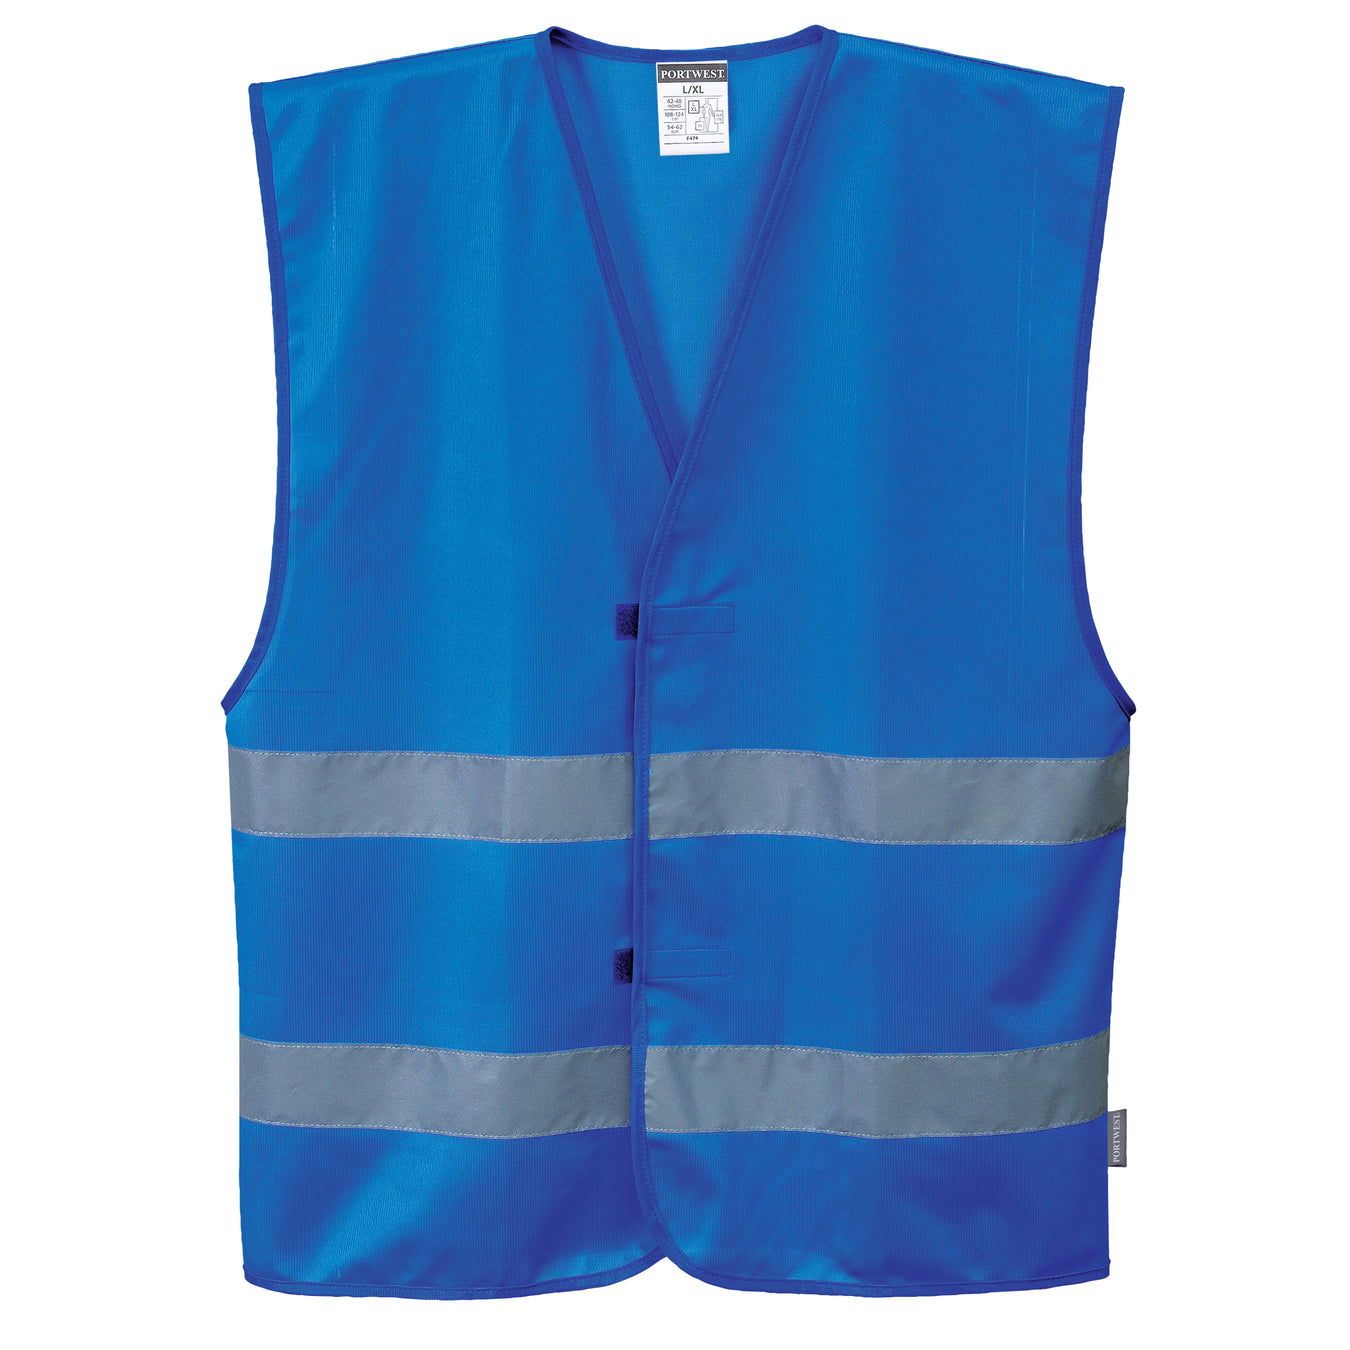 Enhanced Visibility Safety Vests